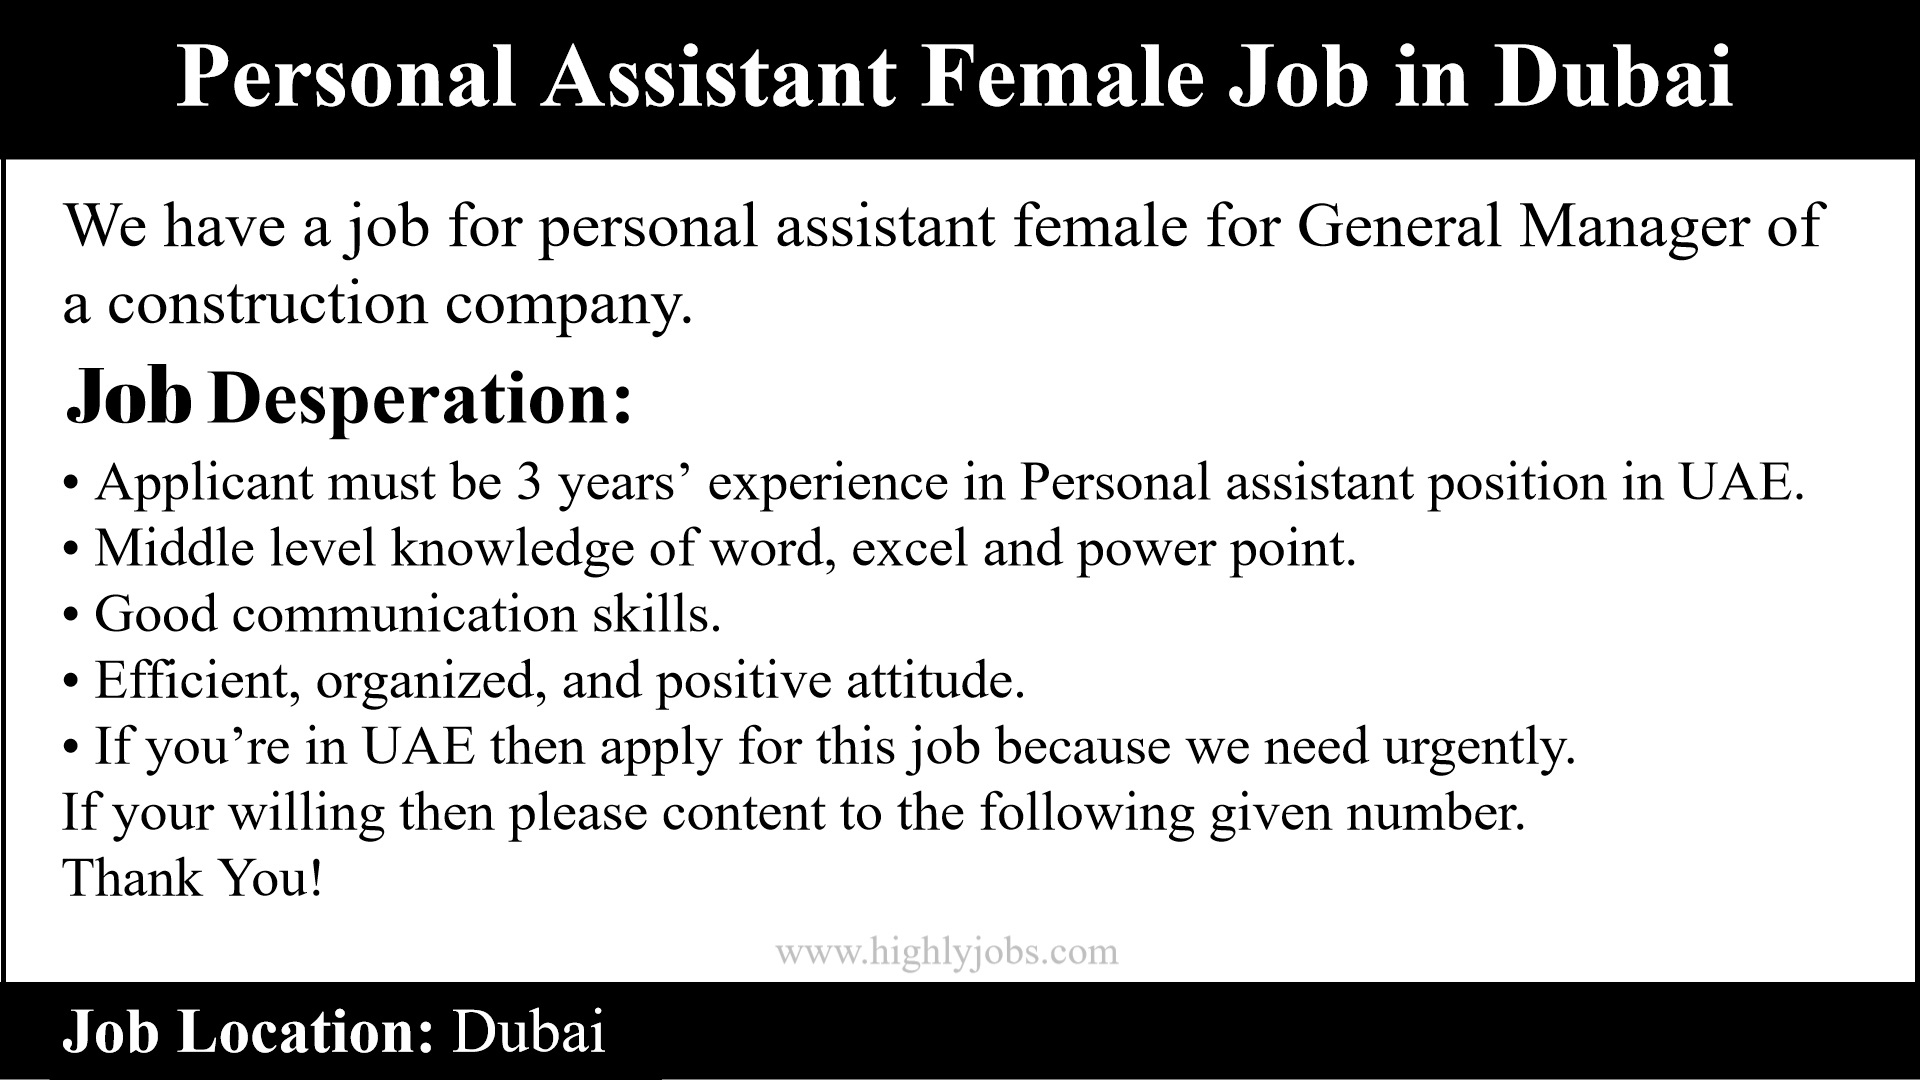 Personal Assistant Female Job in Dubai